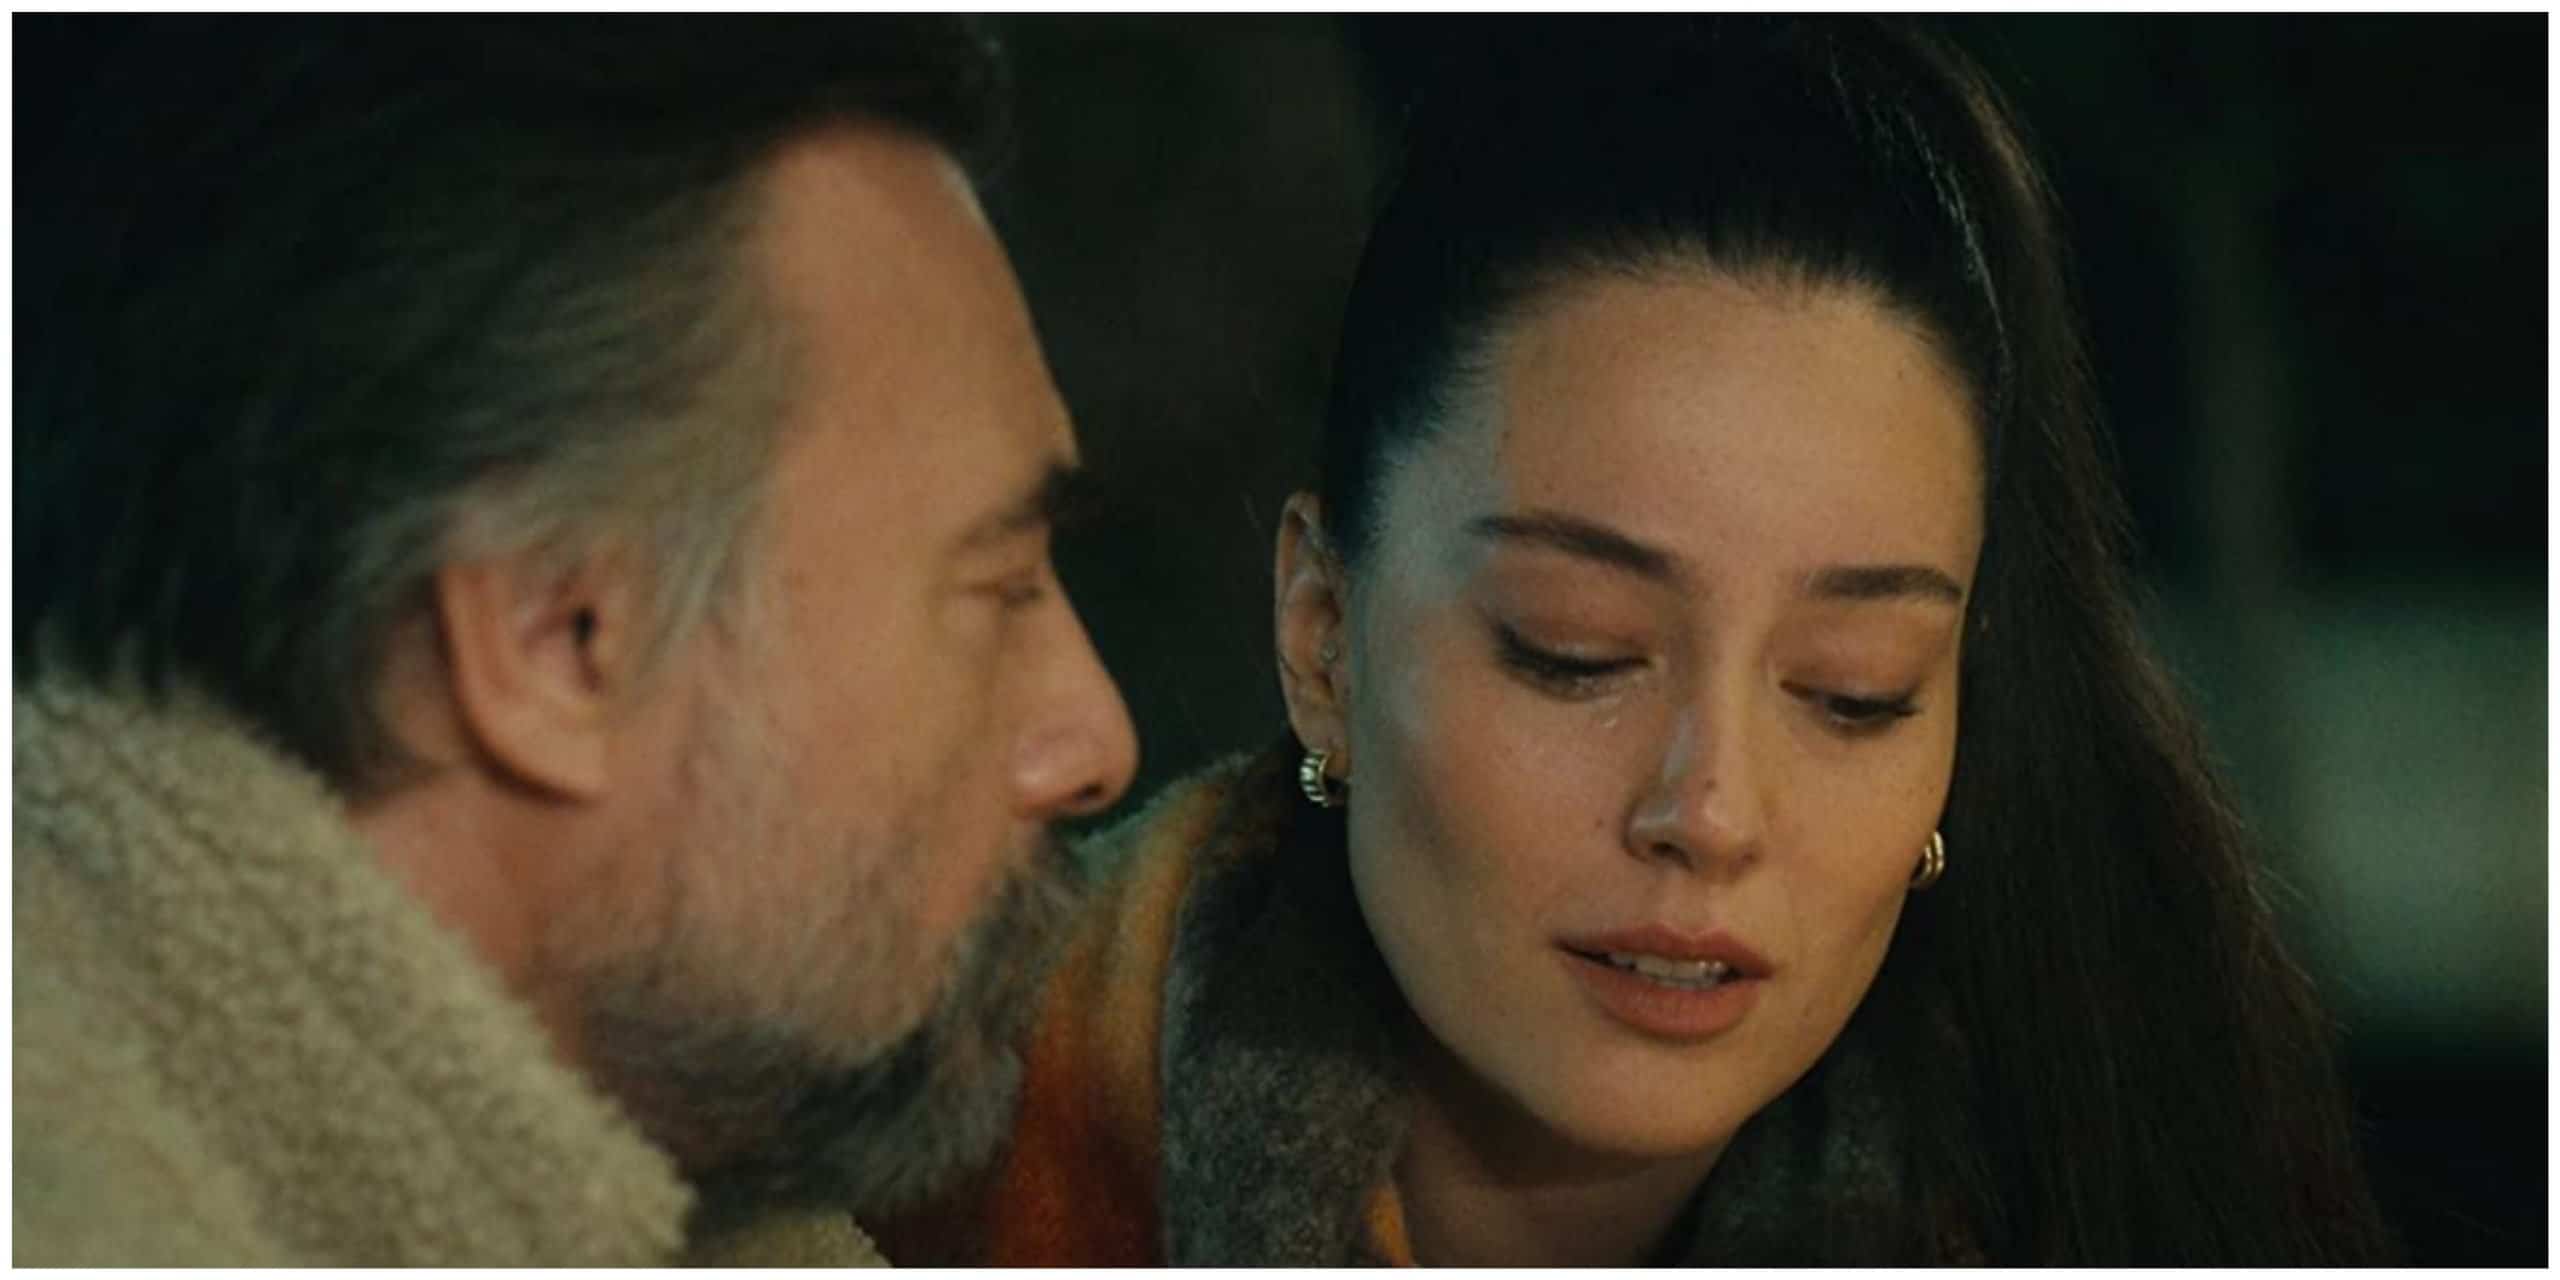 Ben Bu Cihana Sığmazam Turkish Drama Synopsis